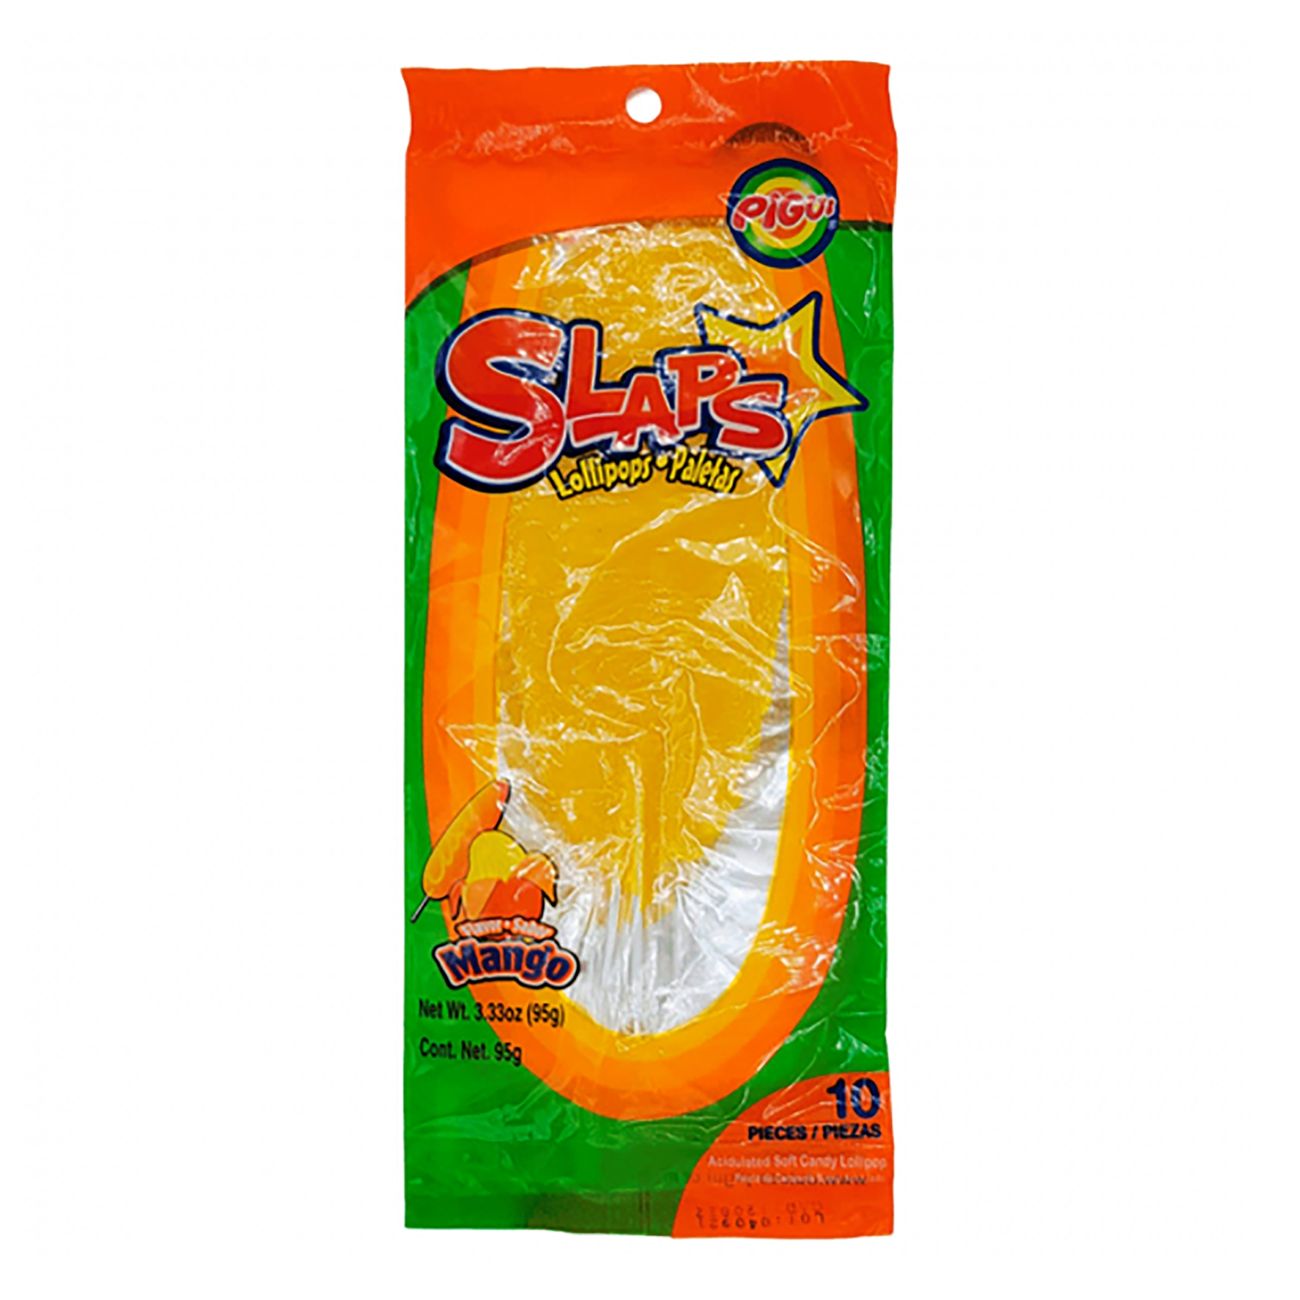 cachetadas-mango-slaps-89835-1